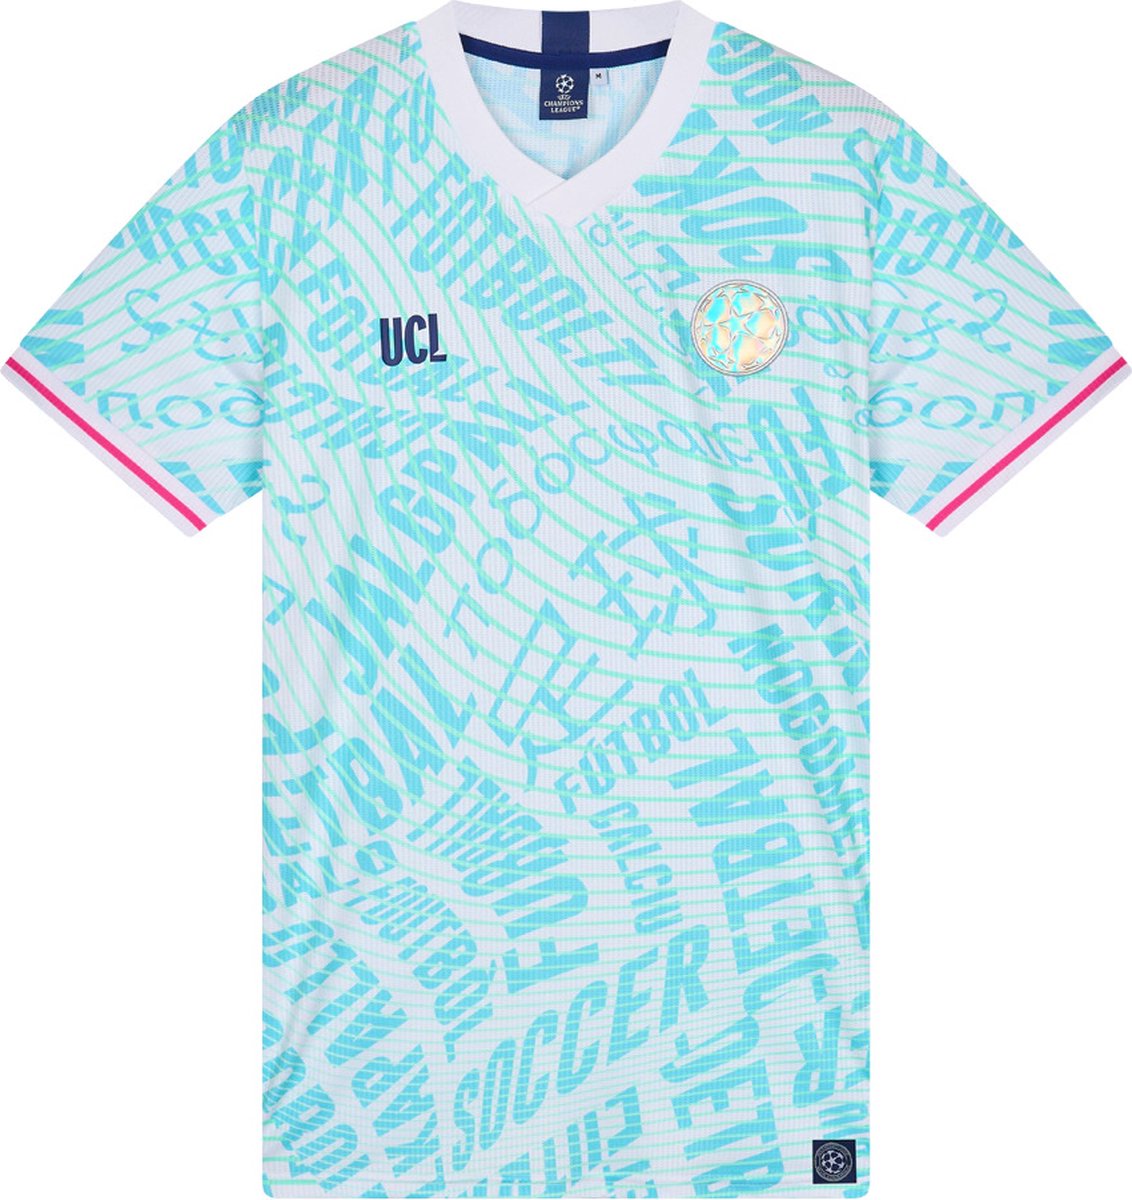 UEFA Champions League Global Native Voetbalshirt - Maat S - Sportshirt Volwassenen - Blauw/Wit